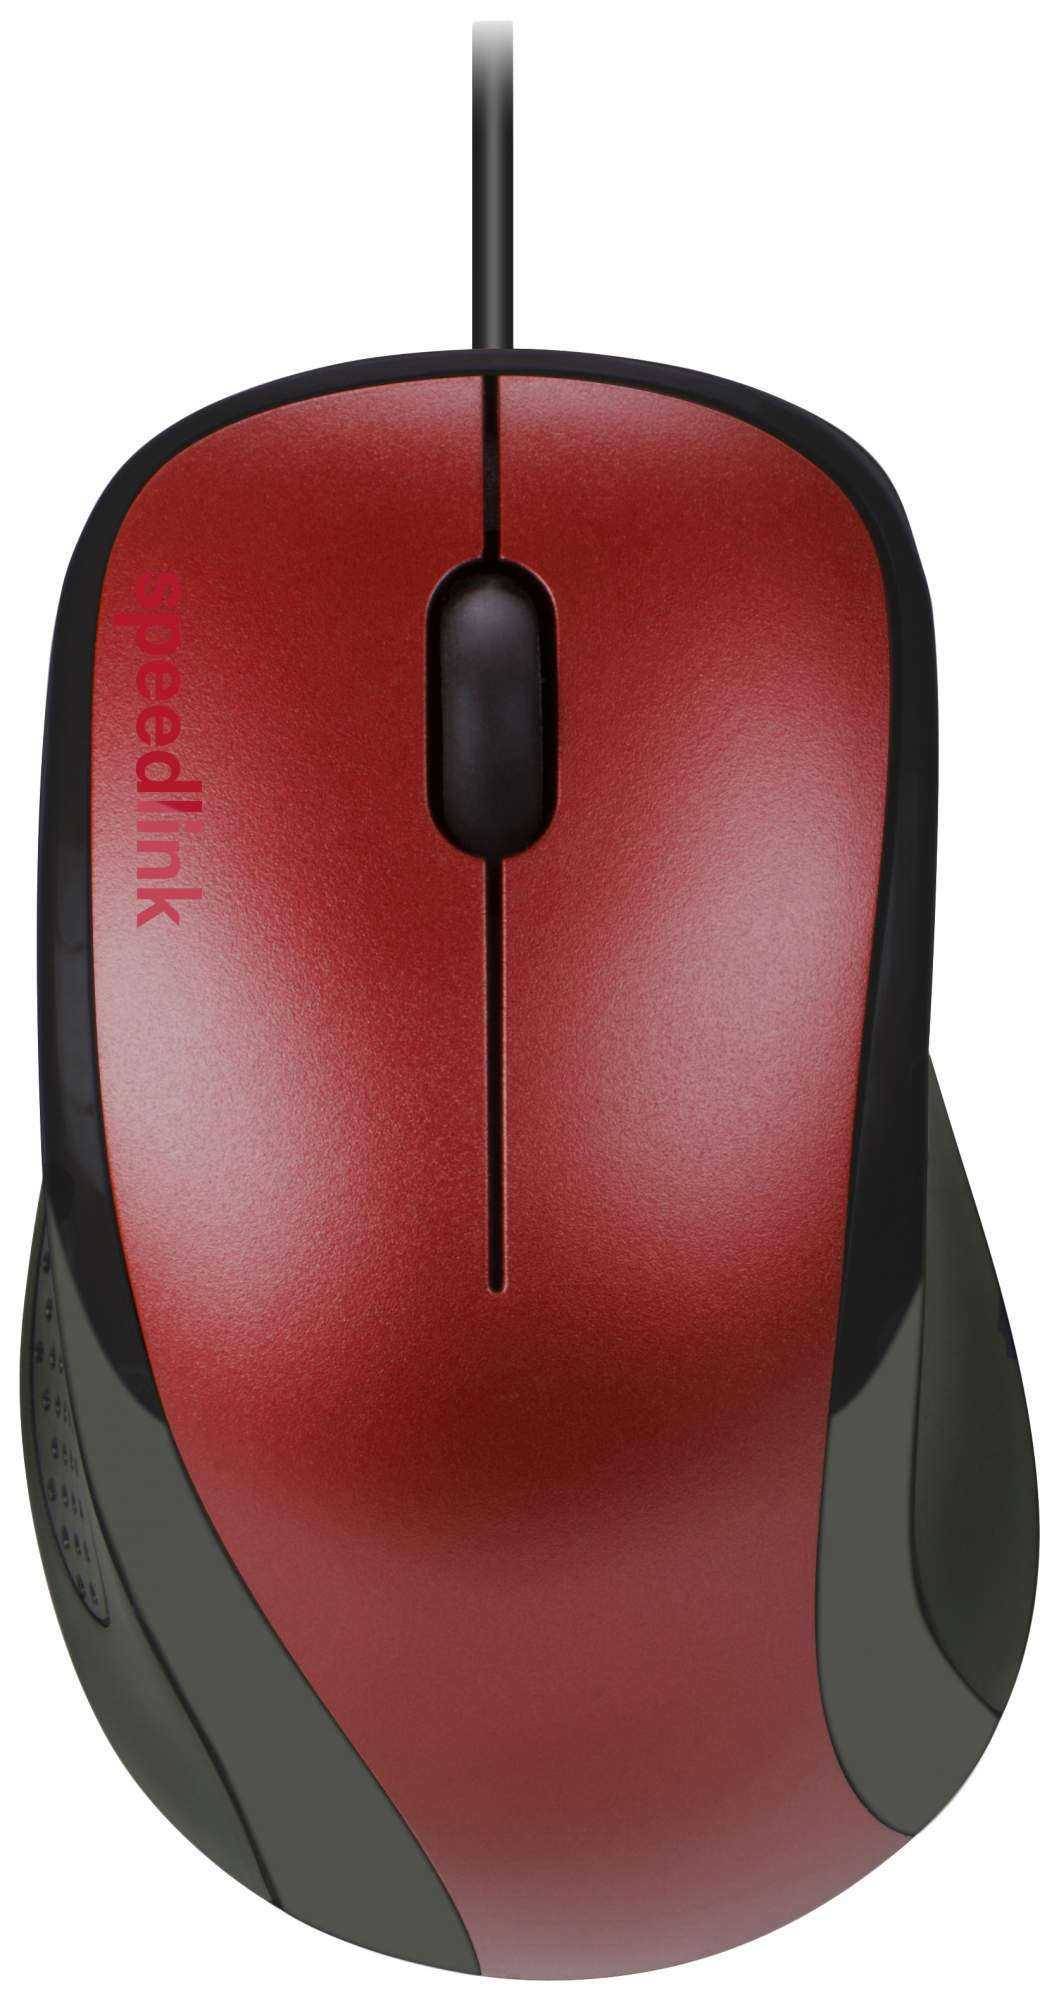 Speedlink kappa mouse wireless red usb